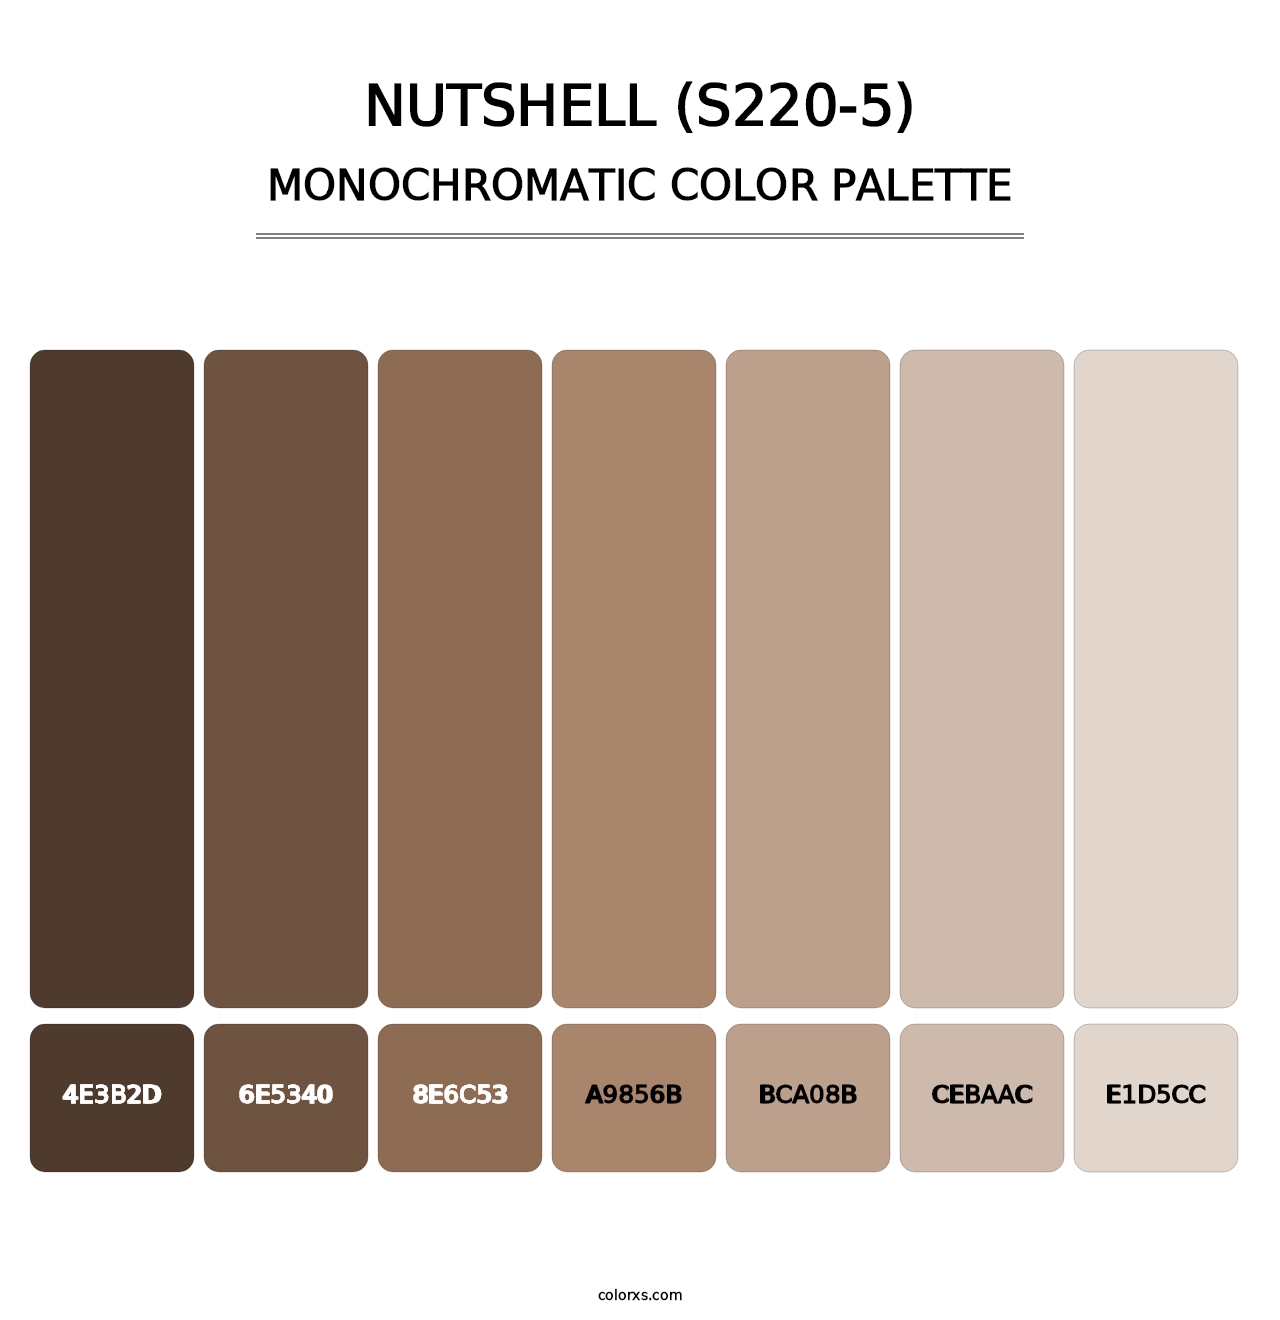 Nutshell (S220-5) - Monochromatic Color Palette